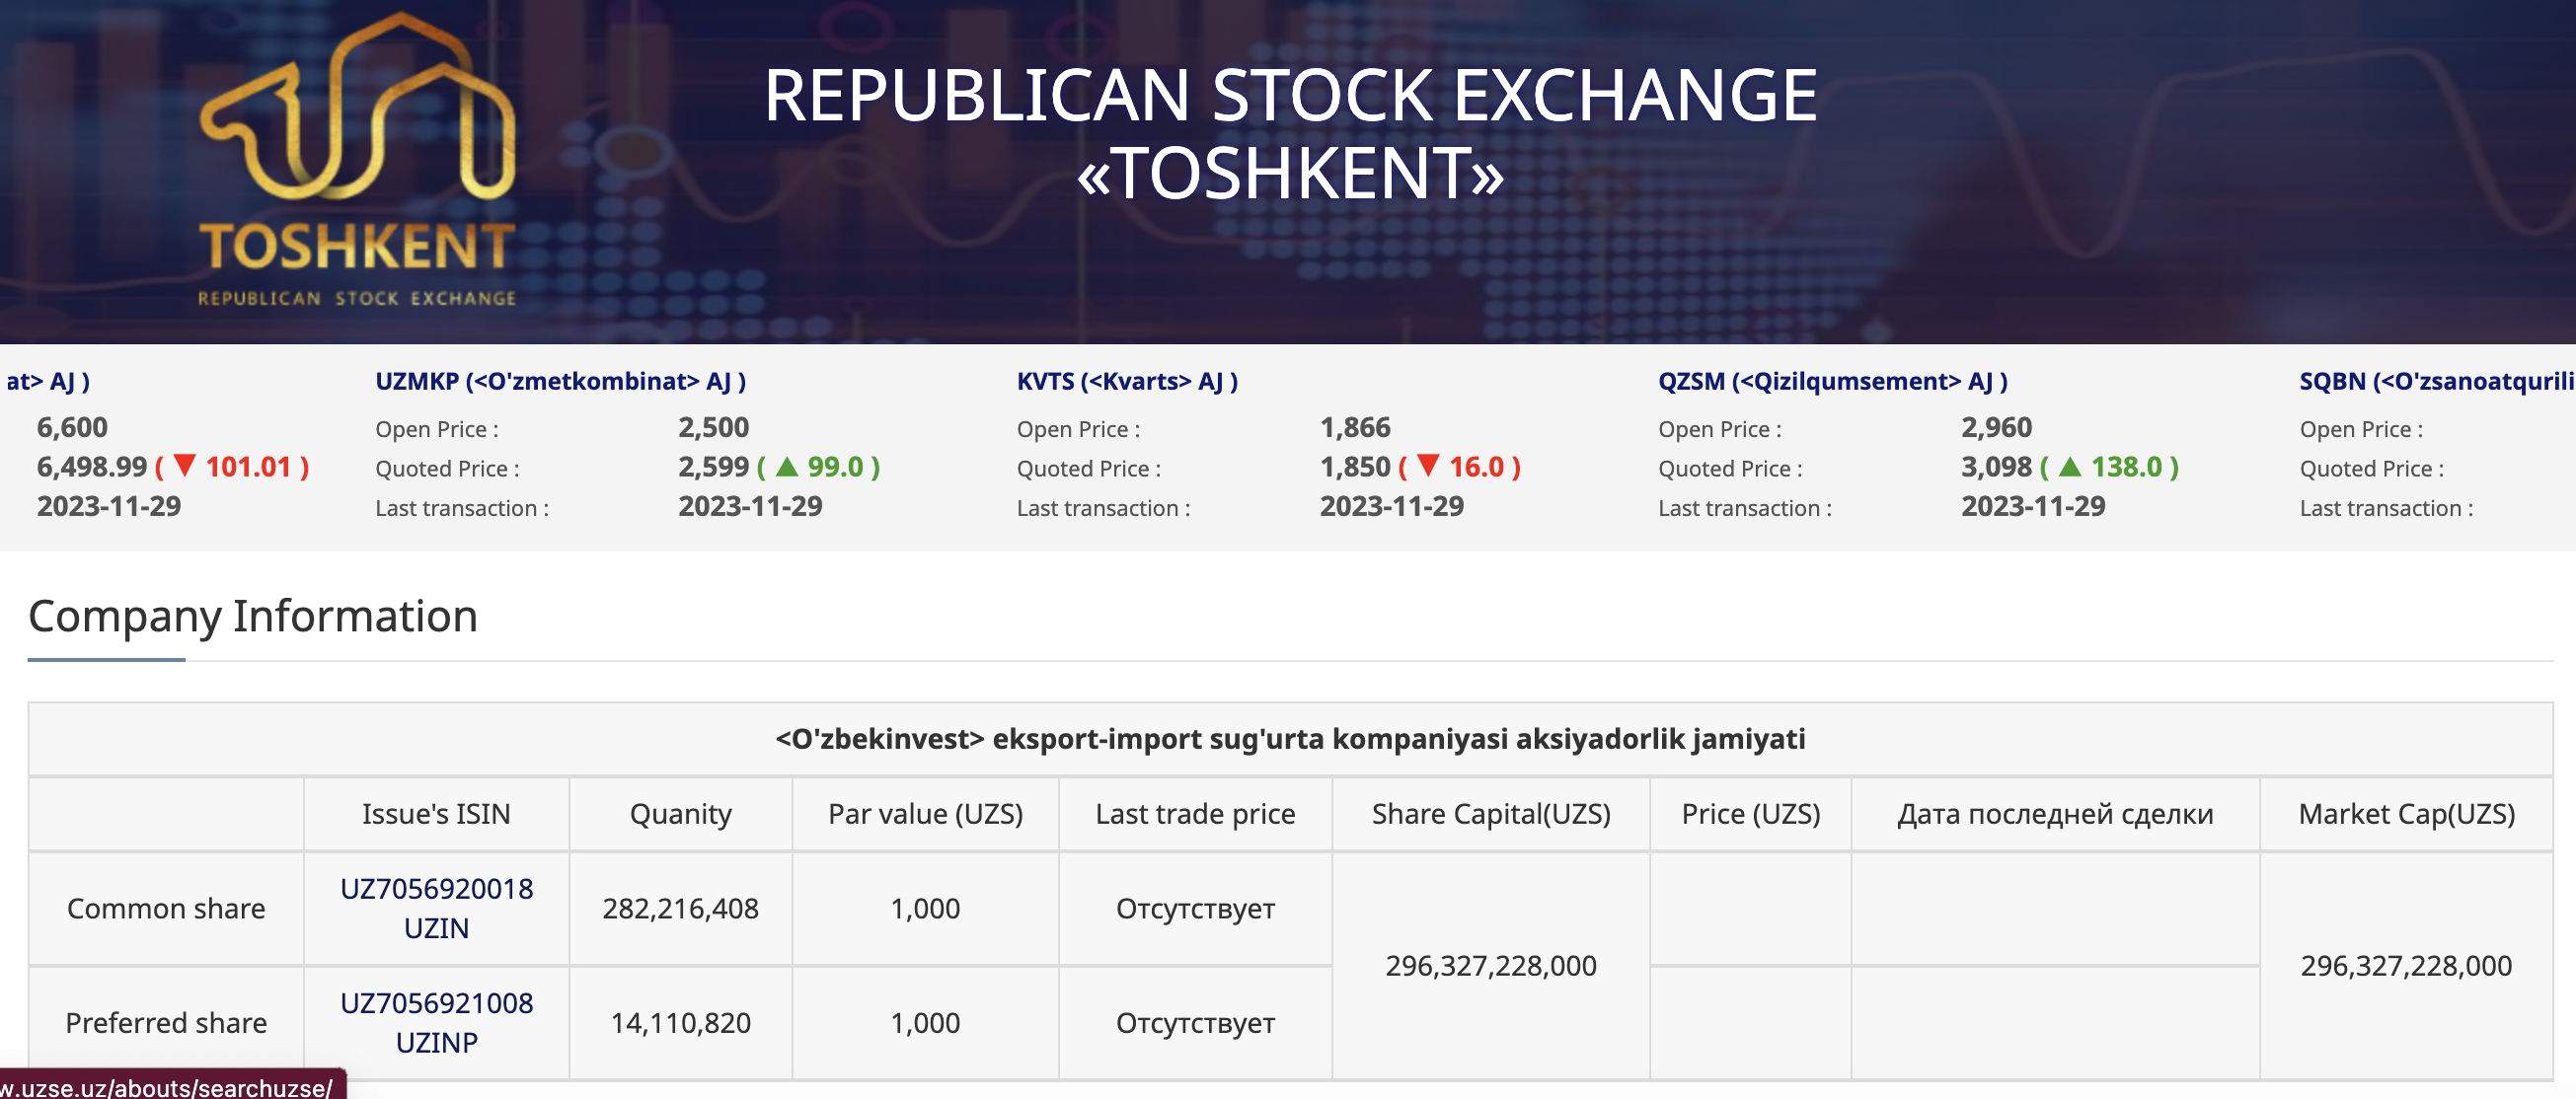 Uzbekinvest's ticker on the Republican Stock Exchange "Tashket" is UZIN and UZINP